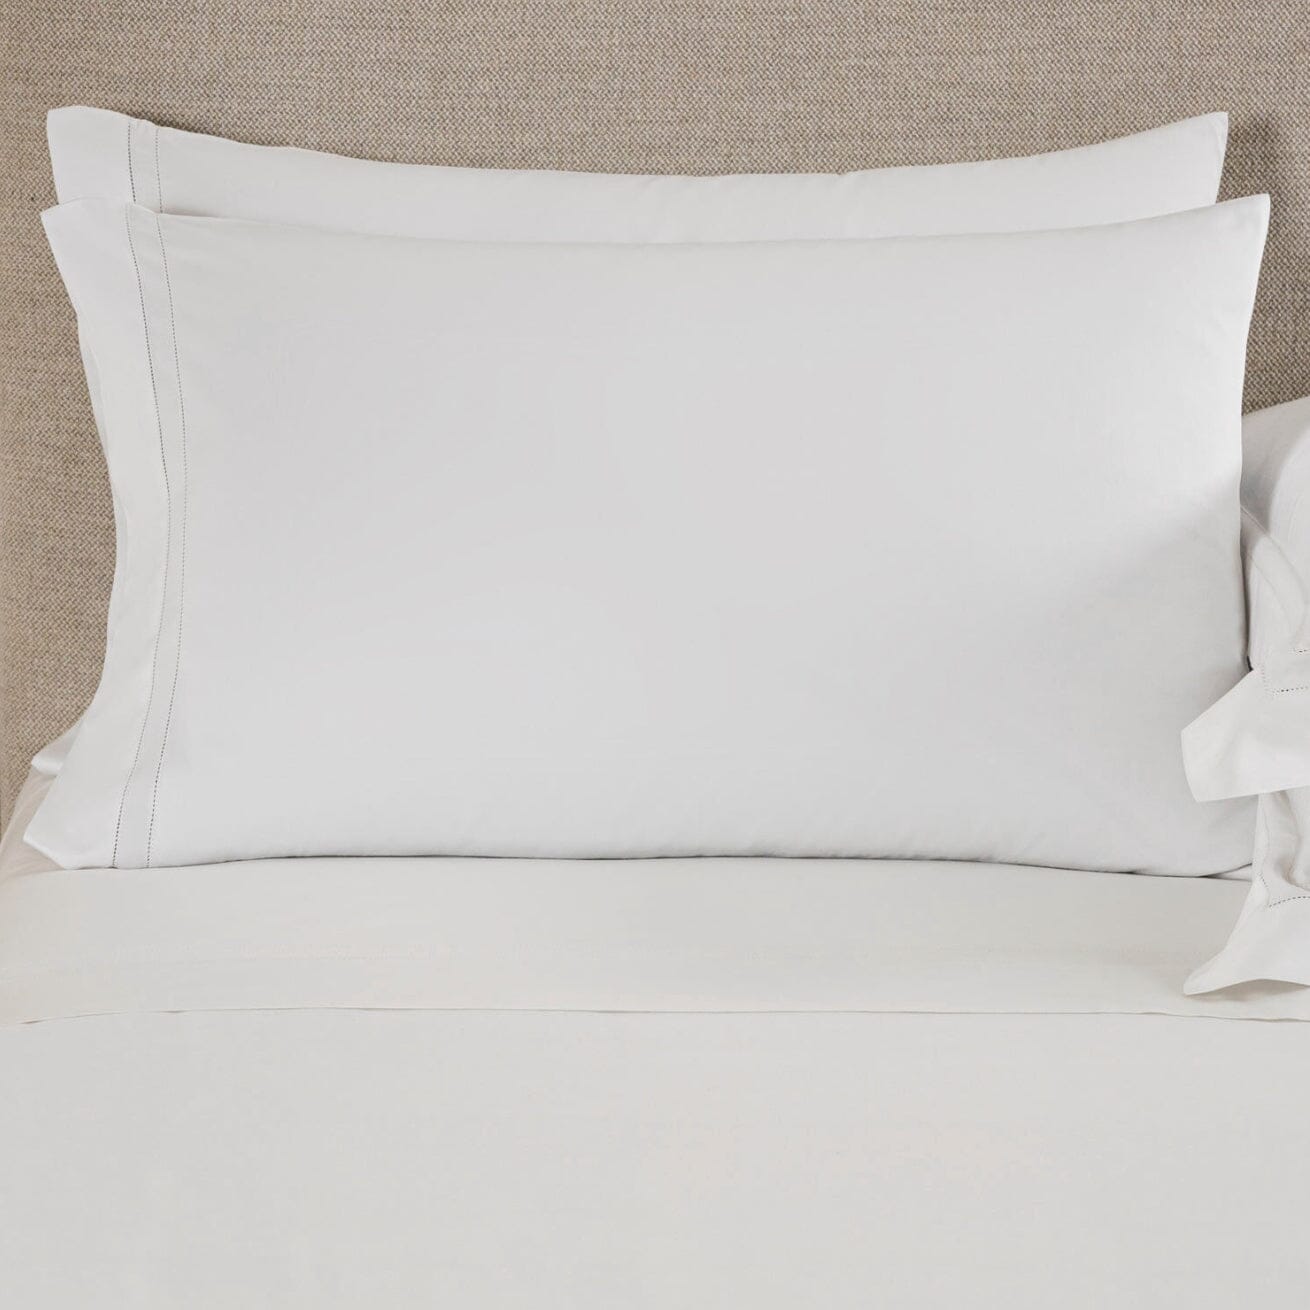 Frette Doppio Ajour Pillow case in White - Fig Linens and Home Bedding